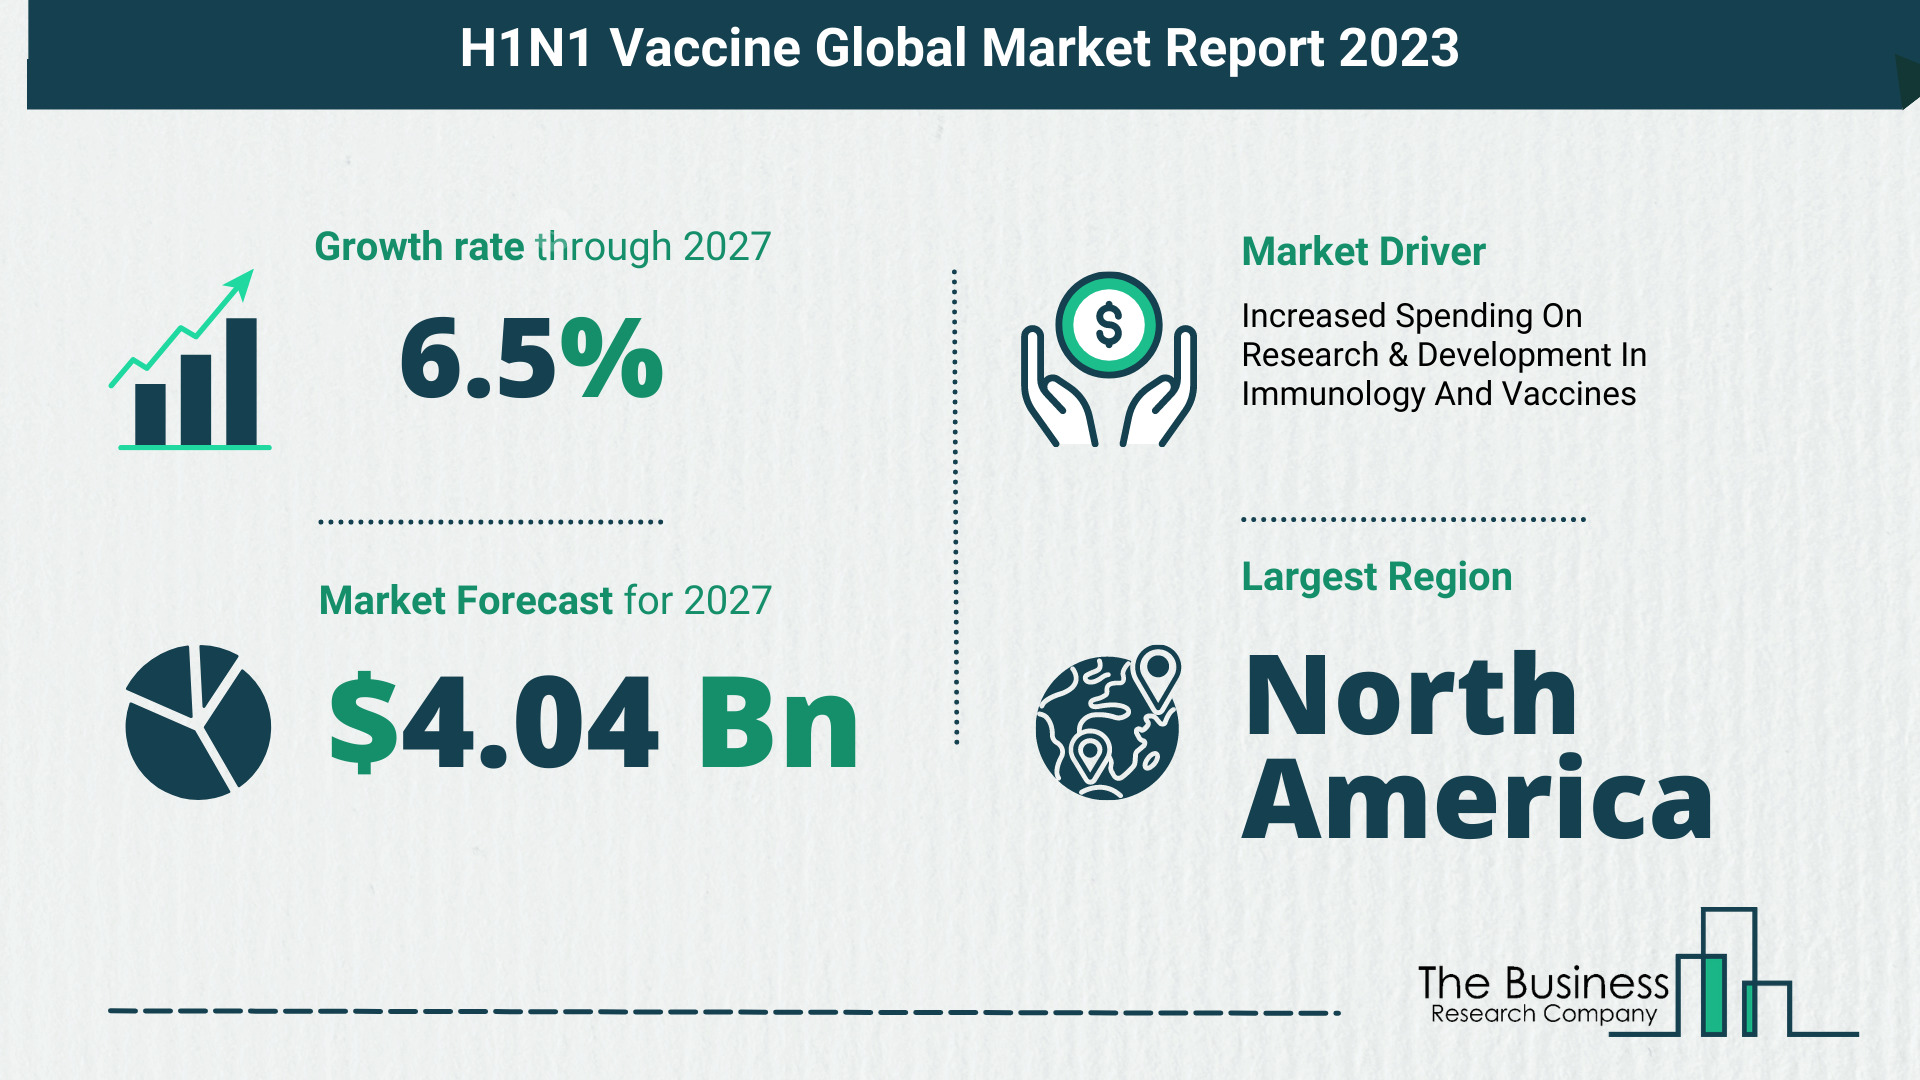 Global H1N1 Vaccine Market